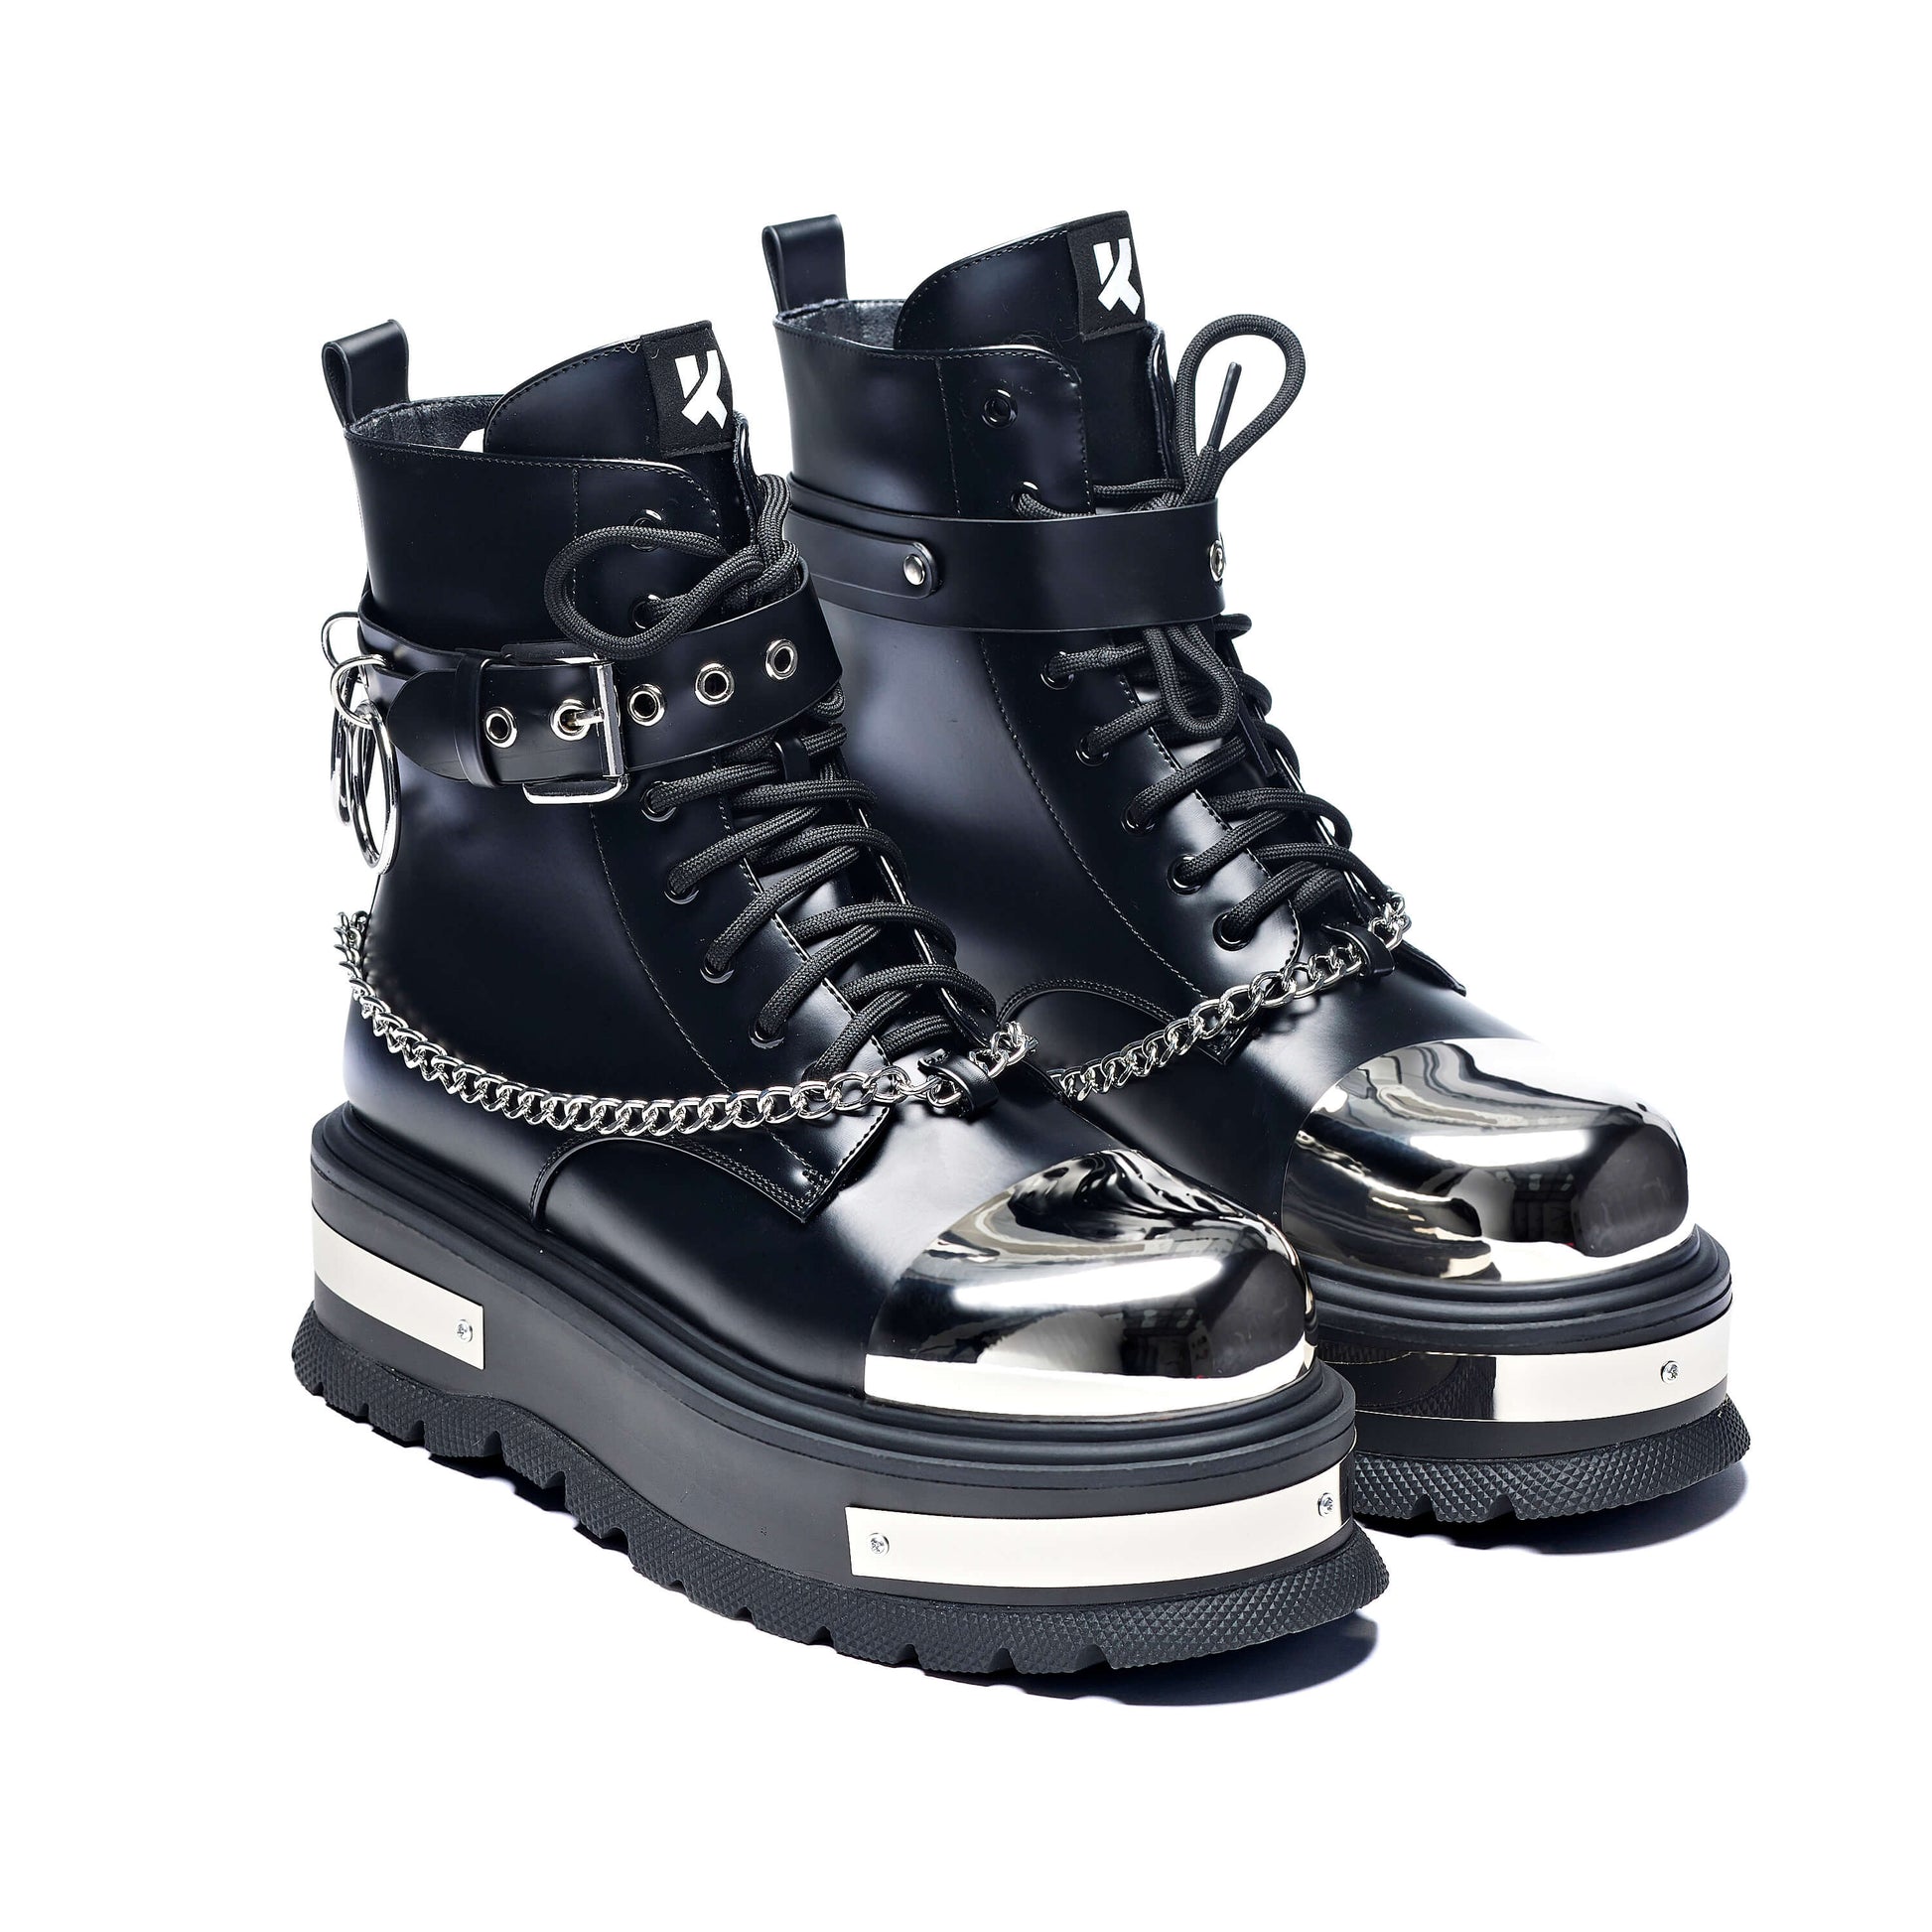 Borin Hardware Platform Boots - Ankle Boots - KOI Footwear - Black - Three-Quarter View